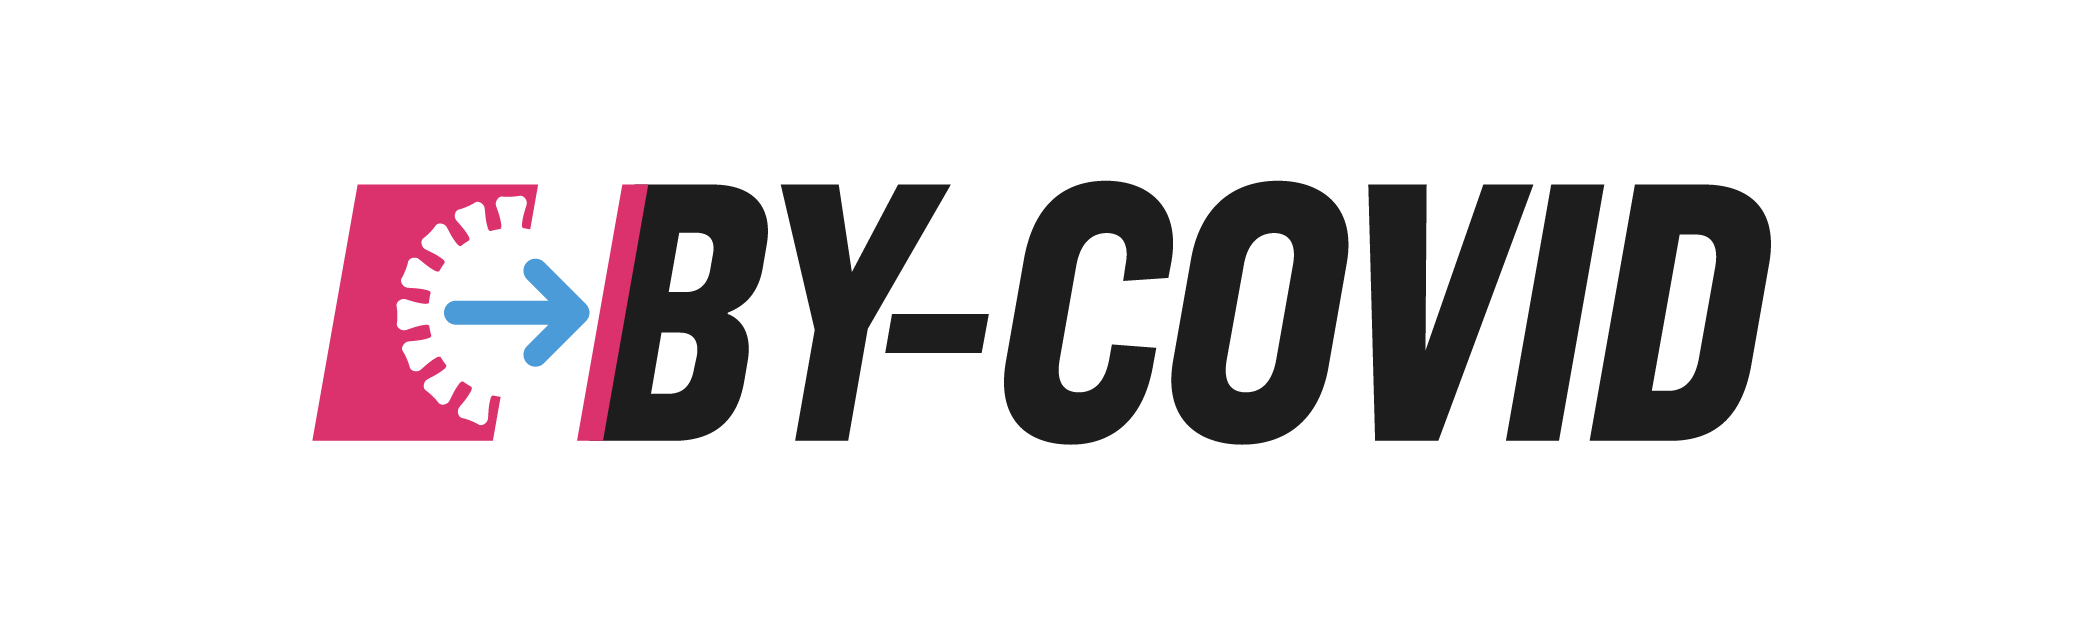 BY-COVID logo